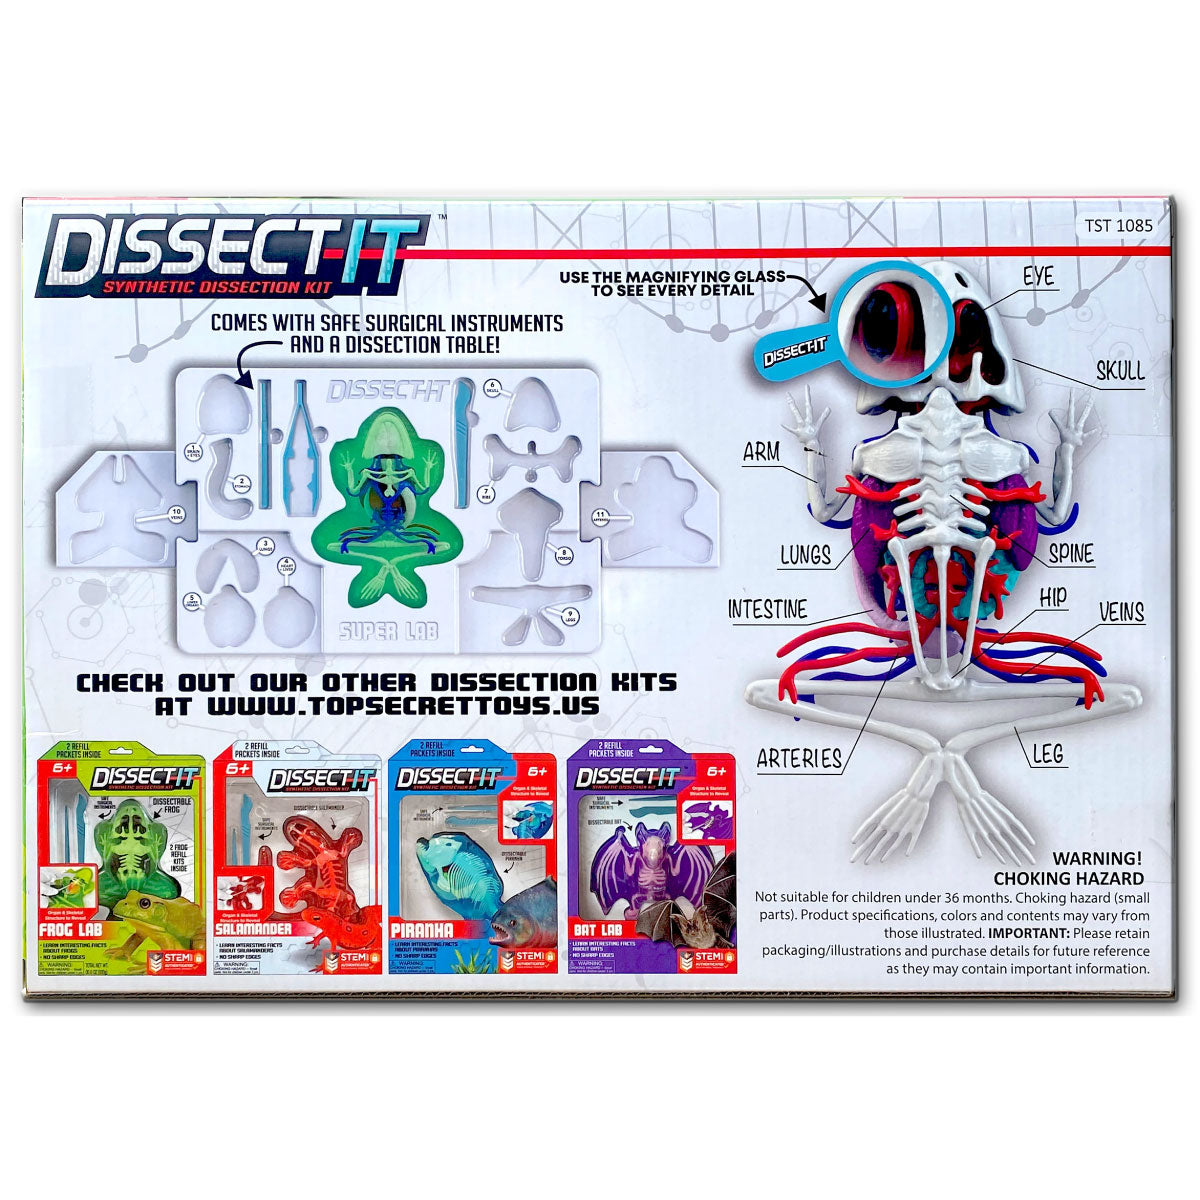 Dissect-It Frog Super Lab STEM Kit from Top Secret Toys